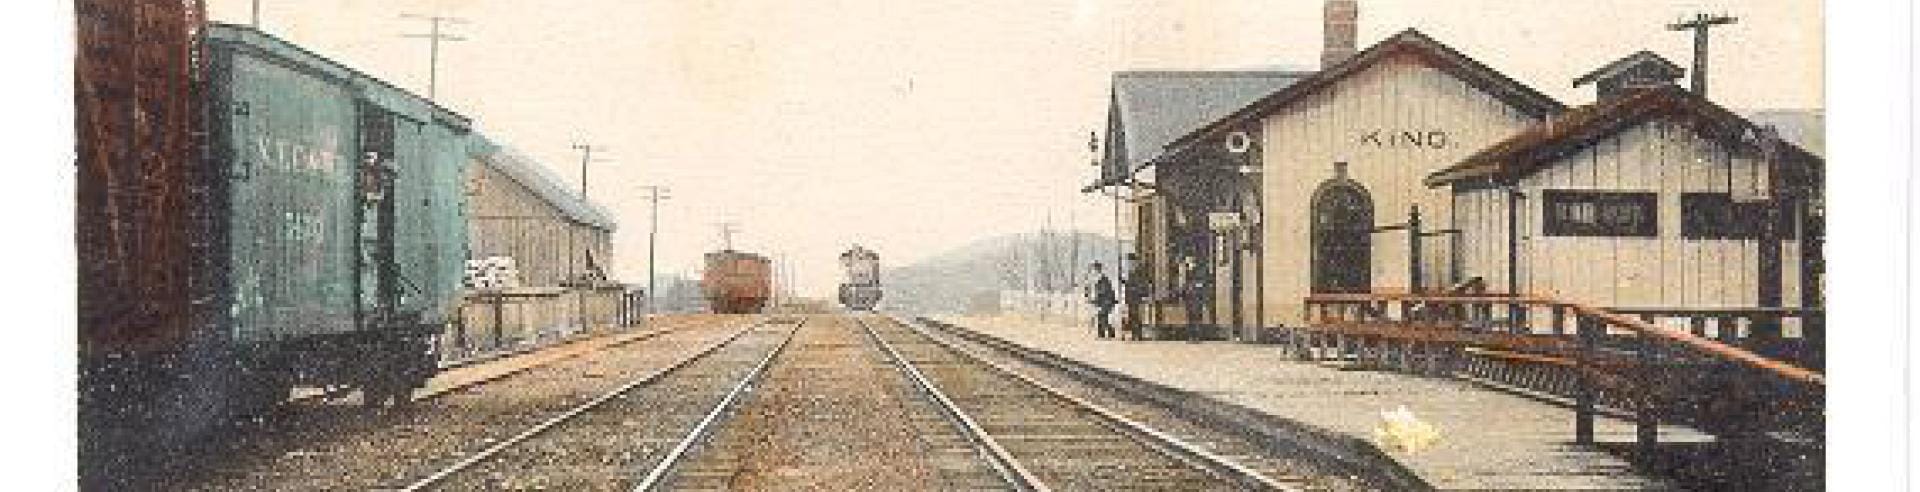 Illustration of King City train station